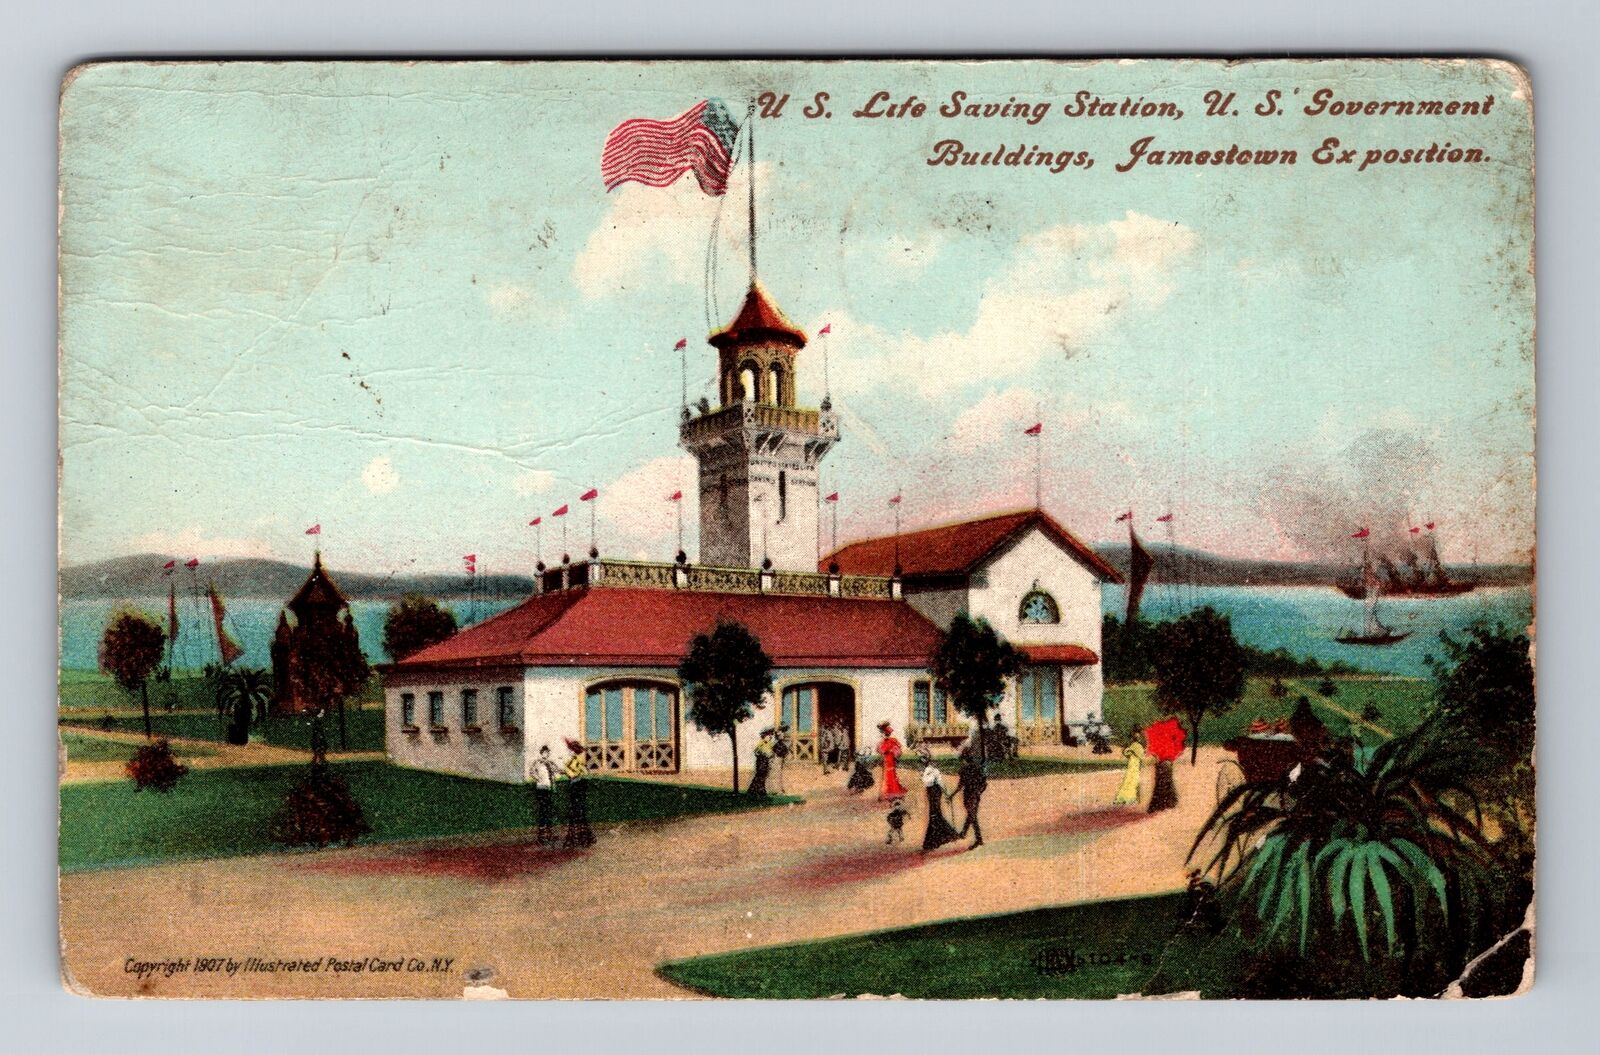 Norfolk VA-Virginia, U.S Life Saving Station US Govt Bldg Vintage c1909 Postcard